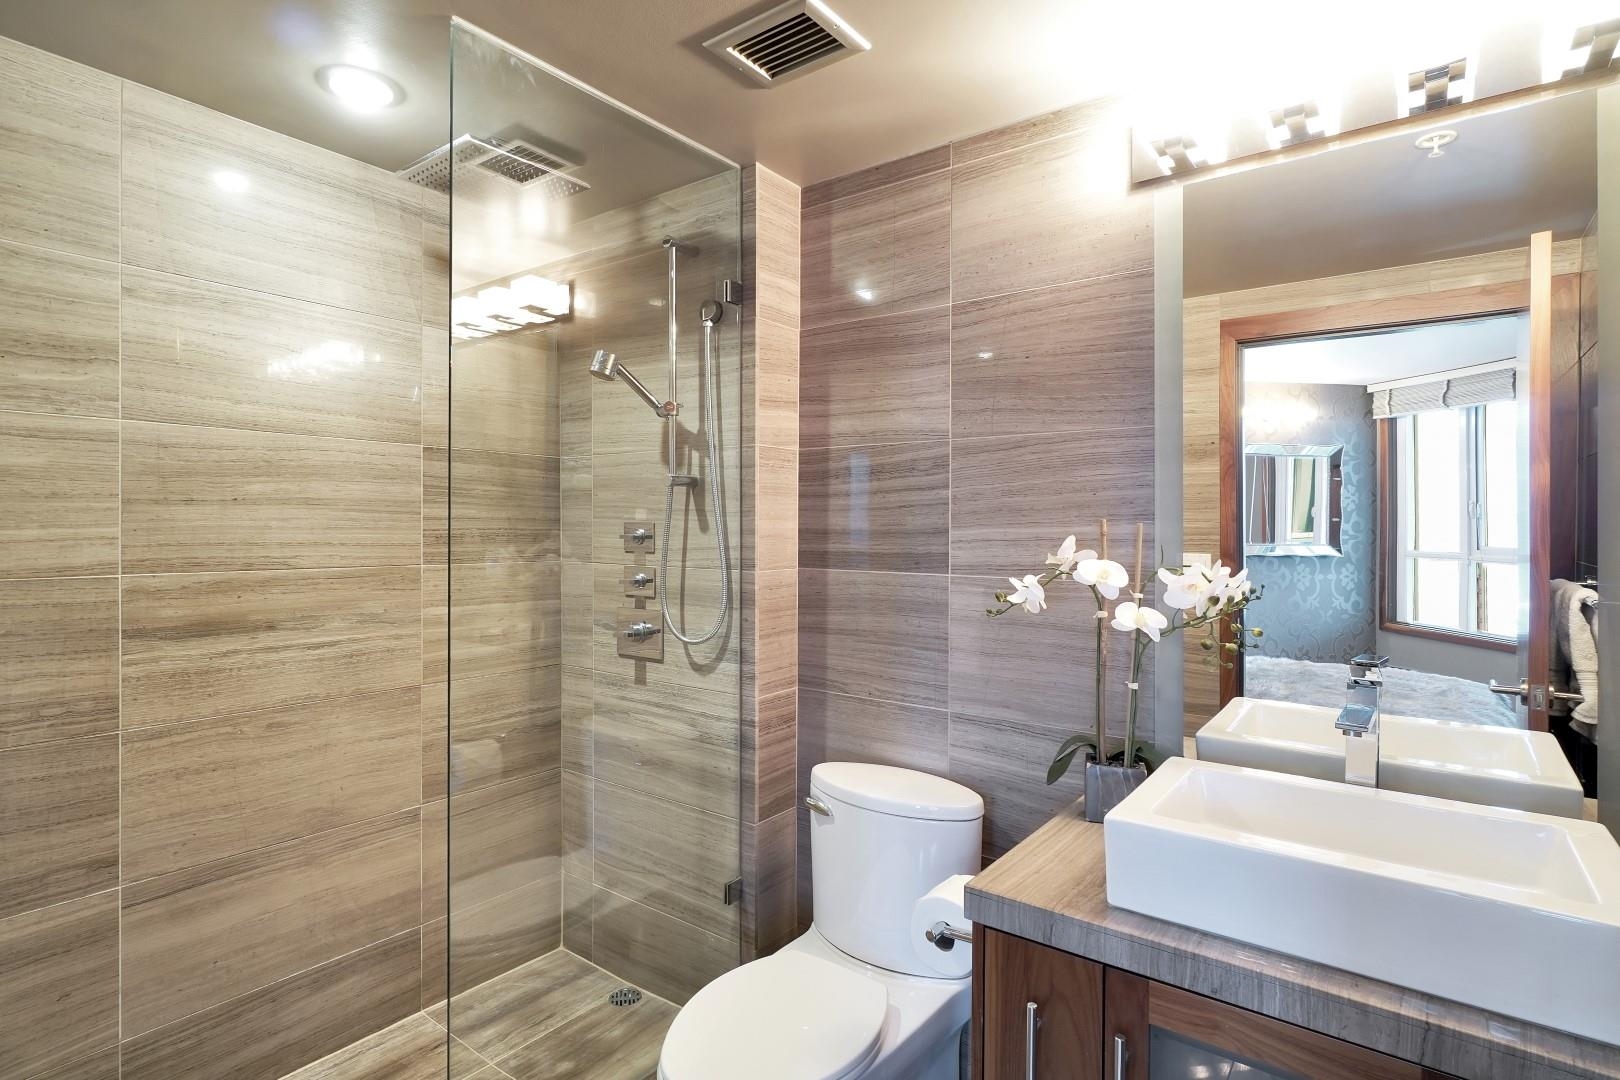 Travertine tile, double glass shower, Rain shower head and handheld shower head.